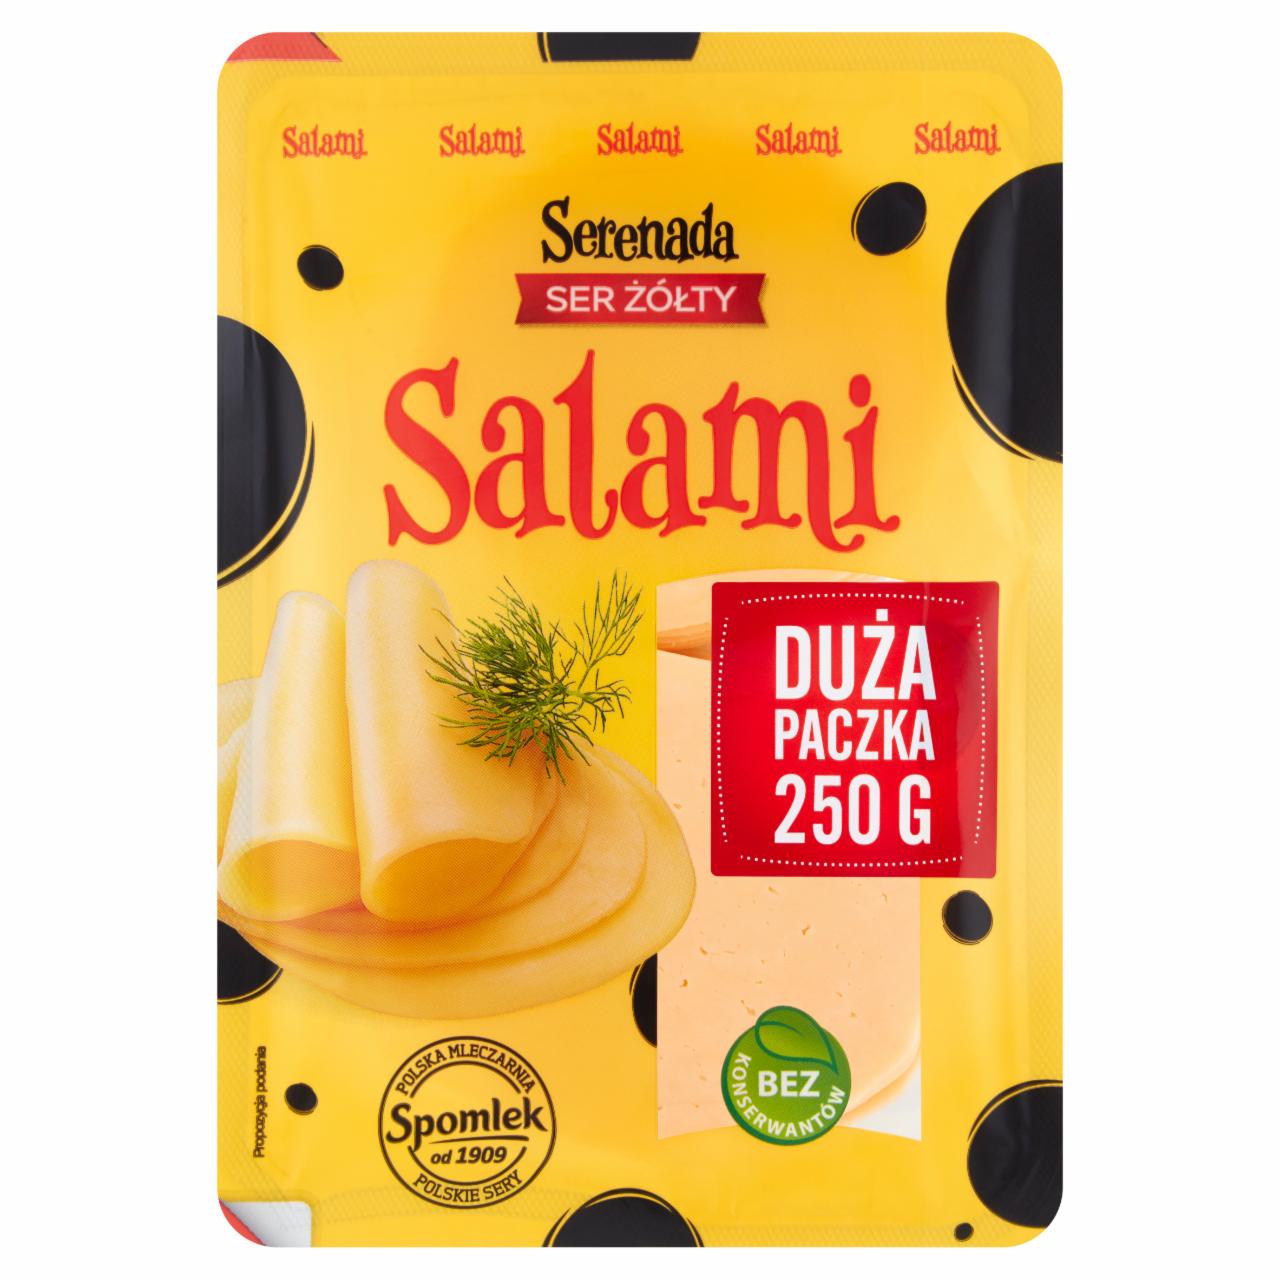 Zdjęcia - Serenada Ser żółty salami 250 g